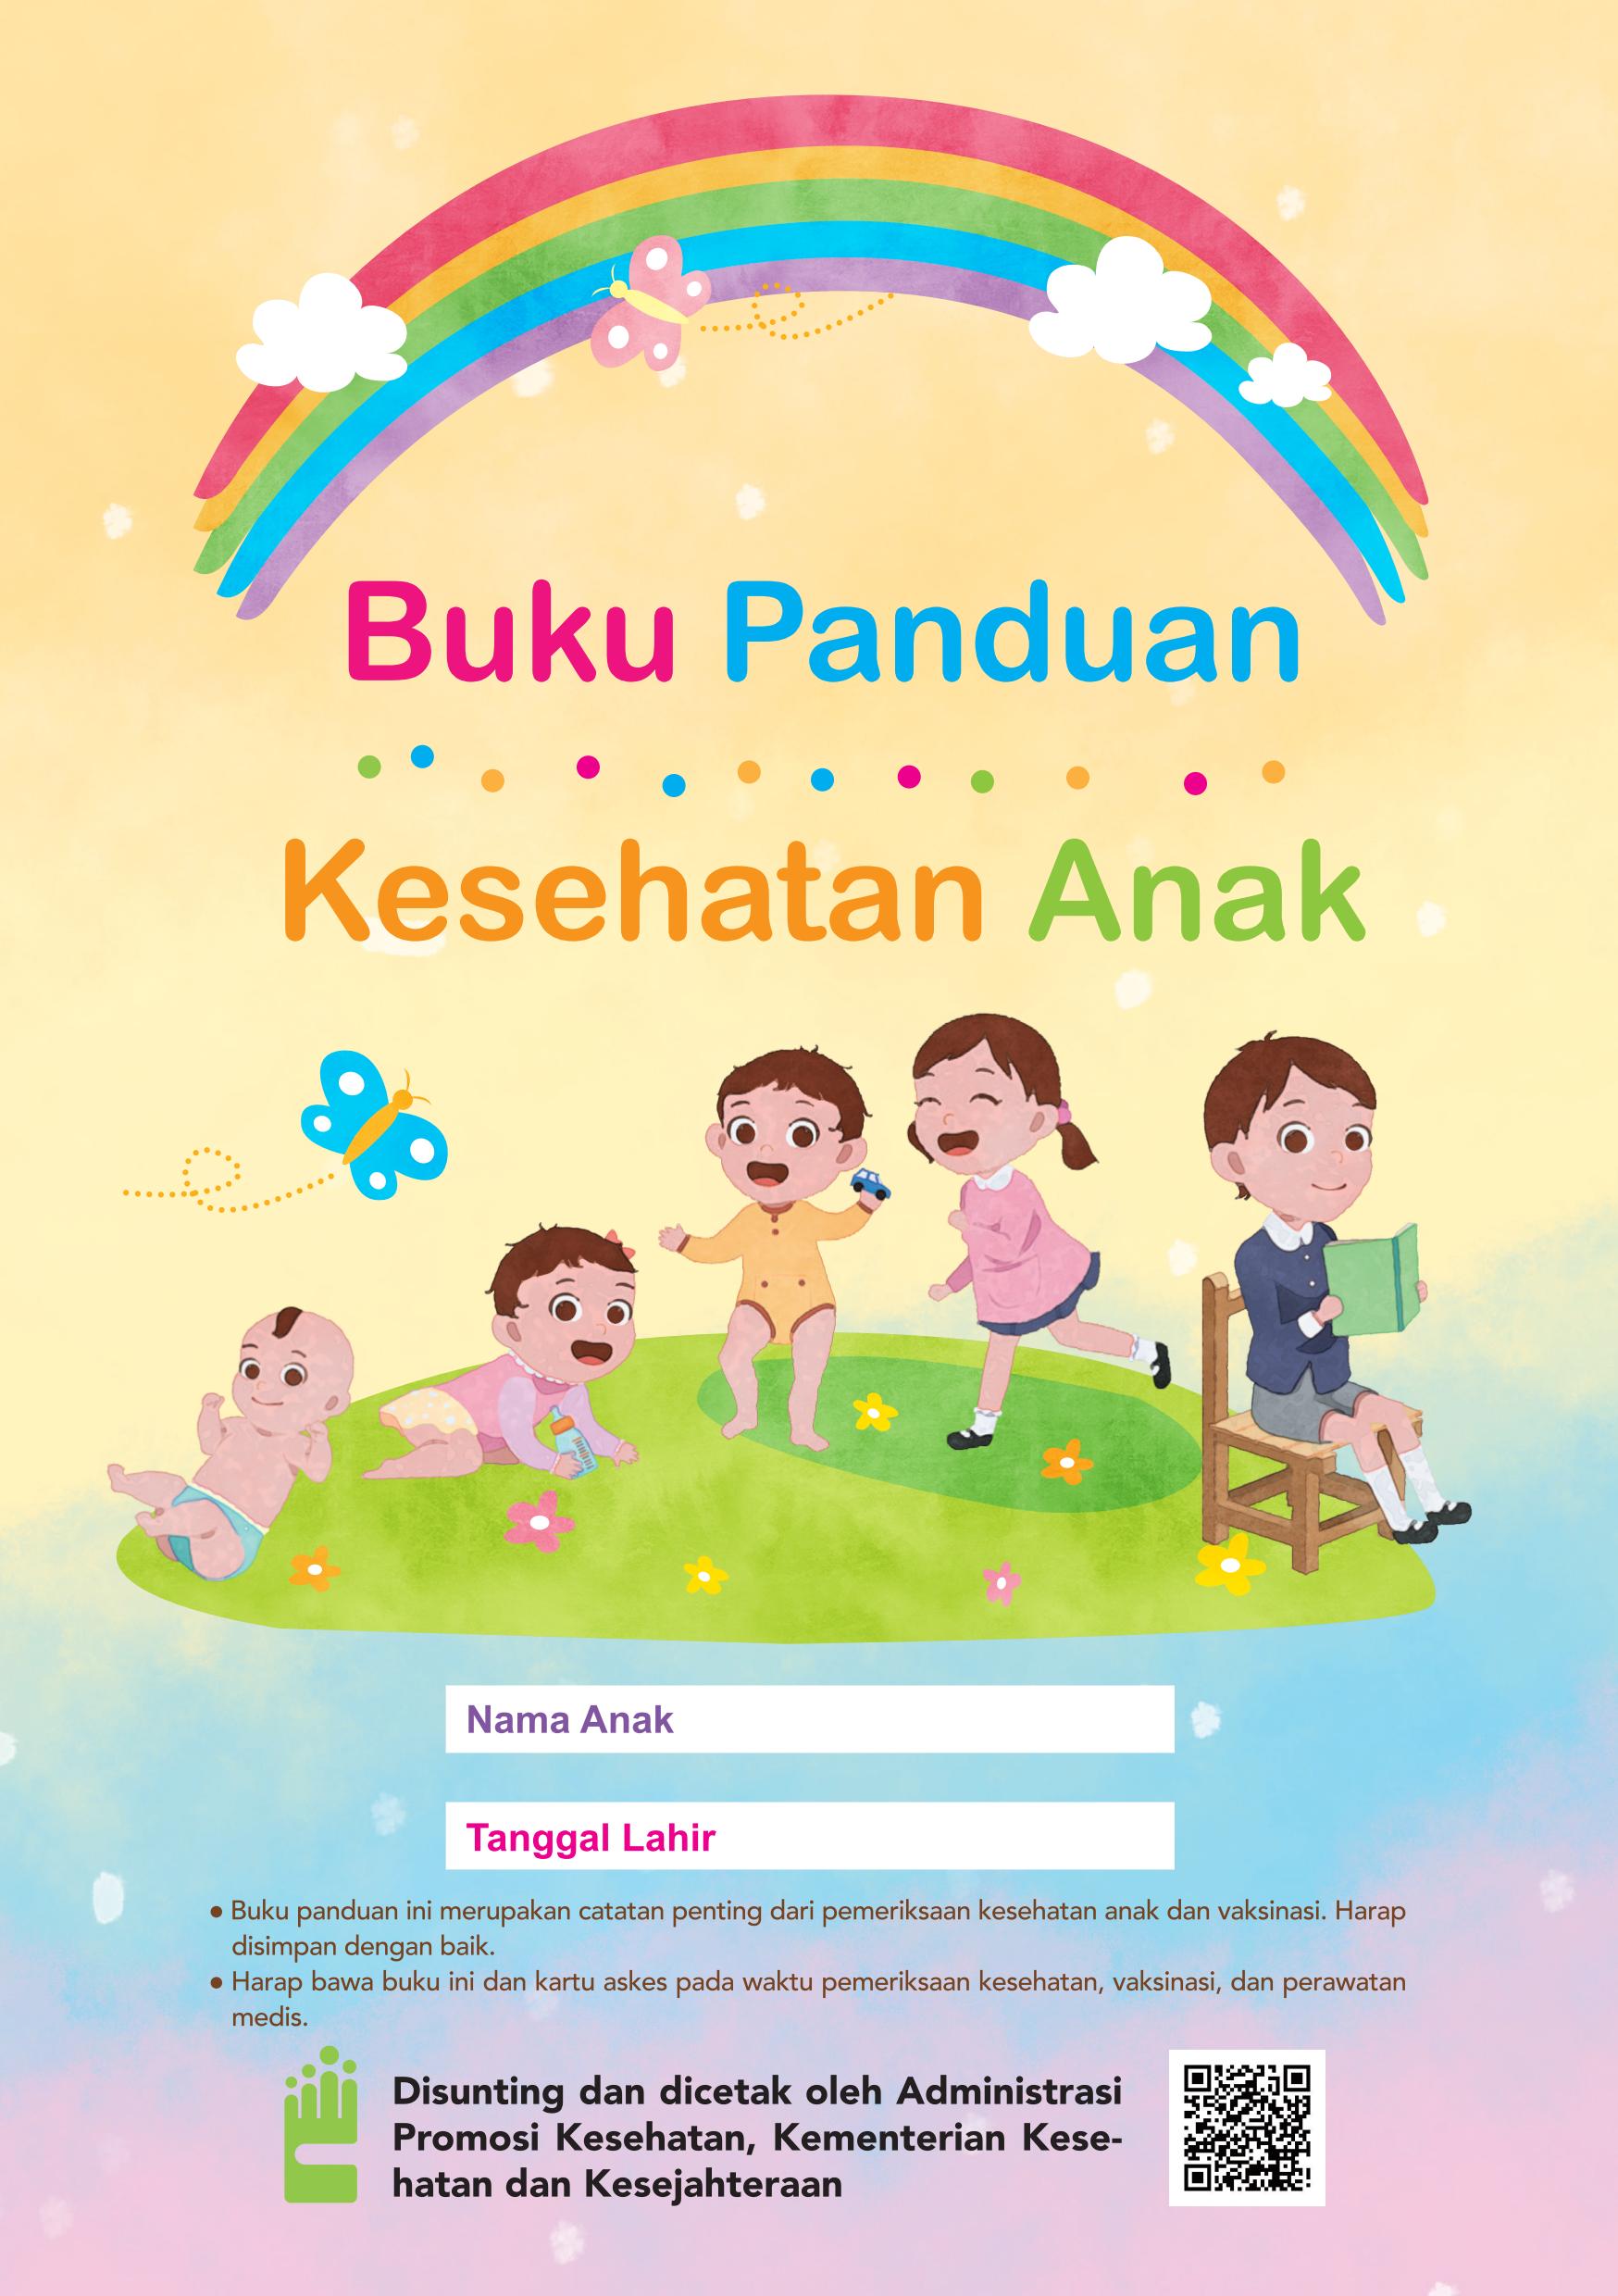 兒童健康手冊(印文版)(出版年月：109年9月) / Buku Panduan Kesehatan Anak / Children Health Handbook(Indonesian version)文章照片